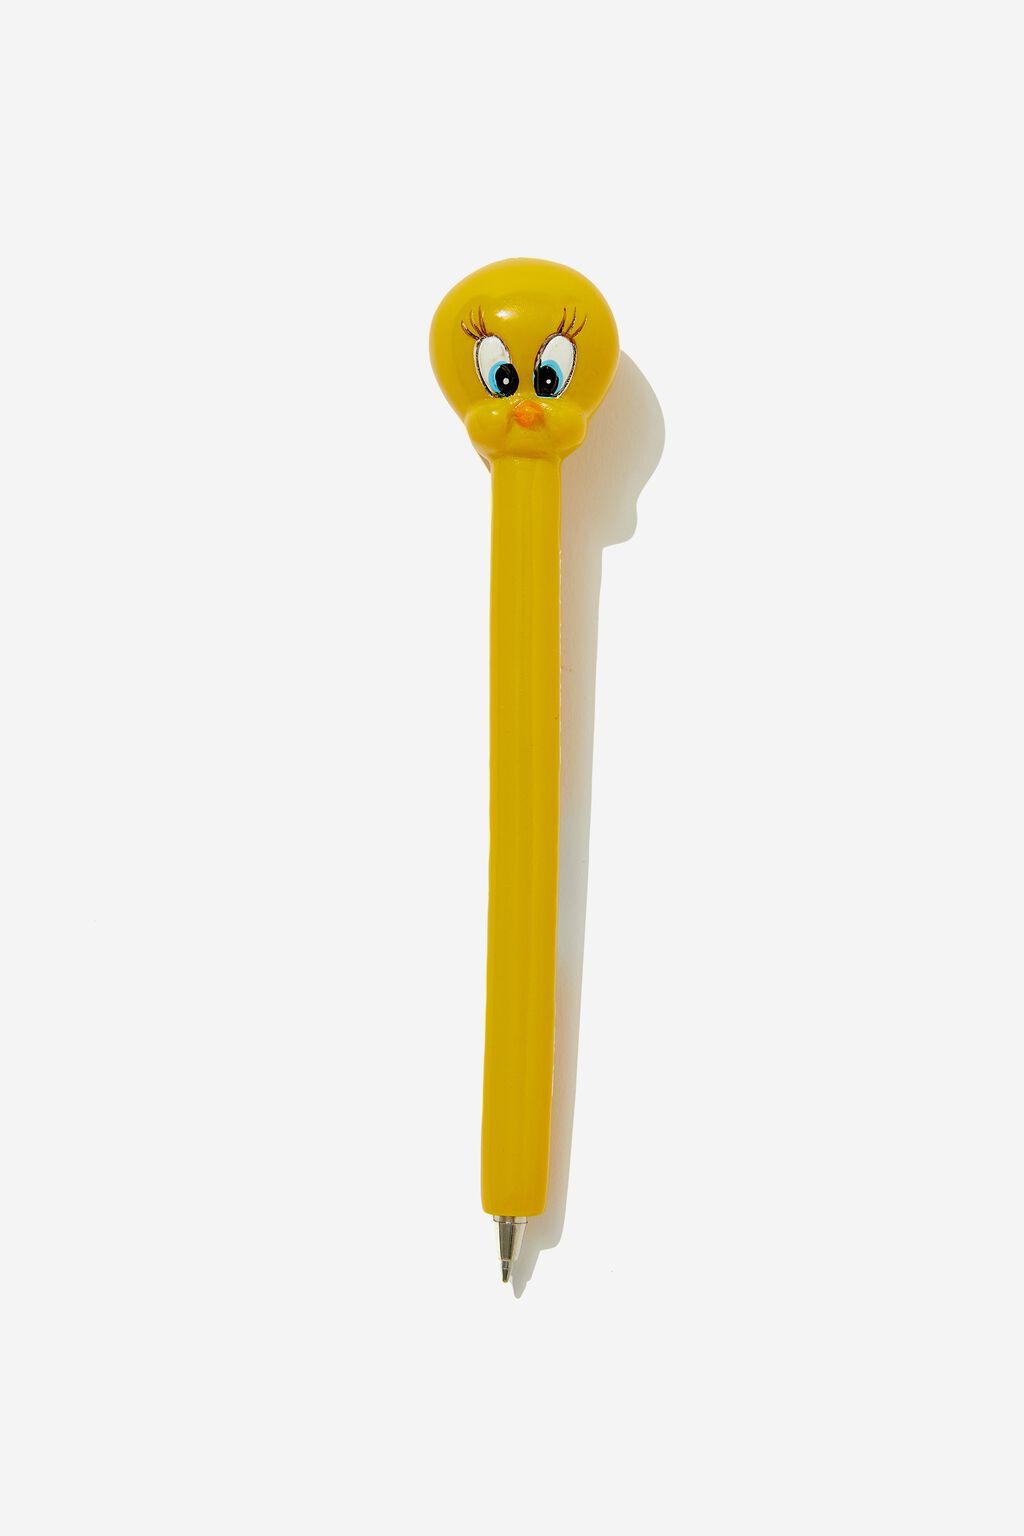 قلم حبر جاف - لوني تونز تويتي